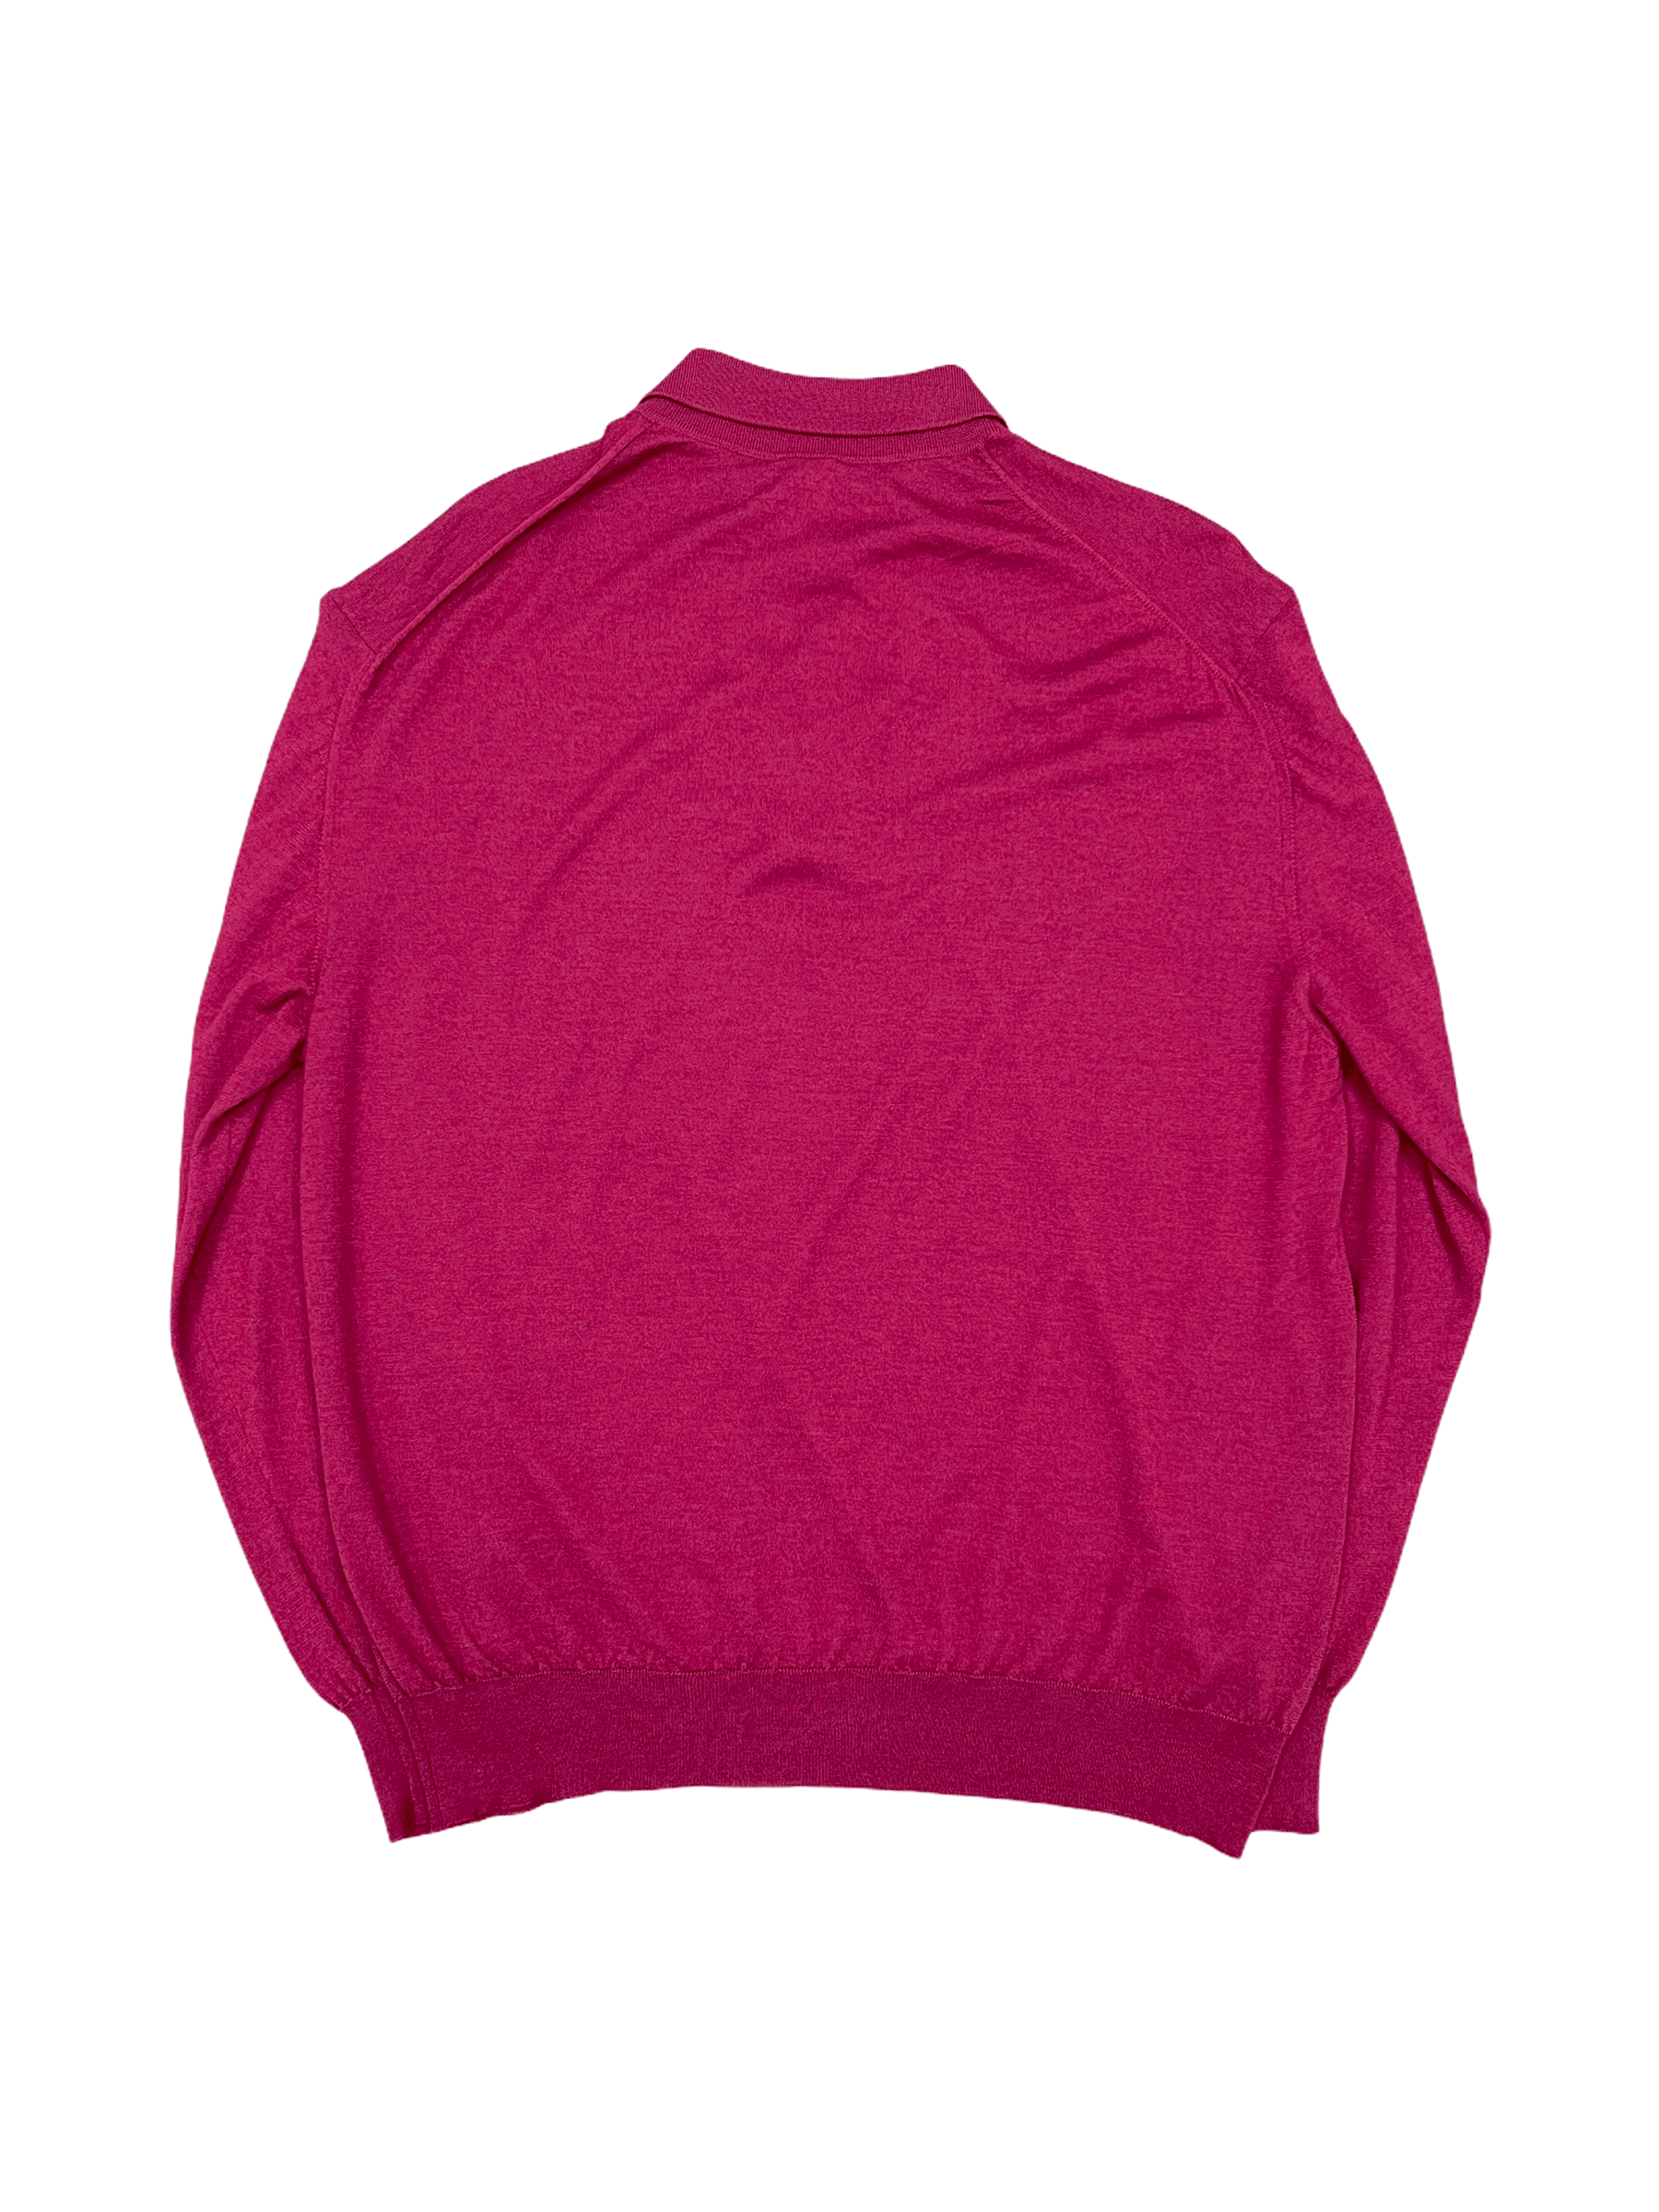 Brioni Merlot Crimson Red Cashmere Long Sleeve Polo Sweater—Genuine Design luxury consignment